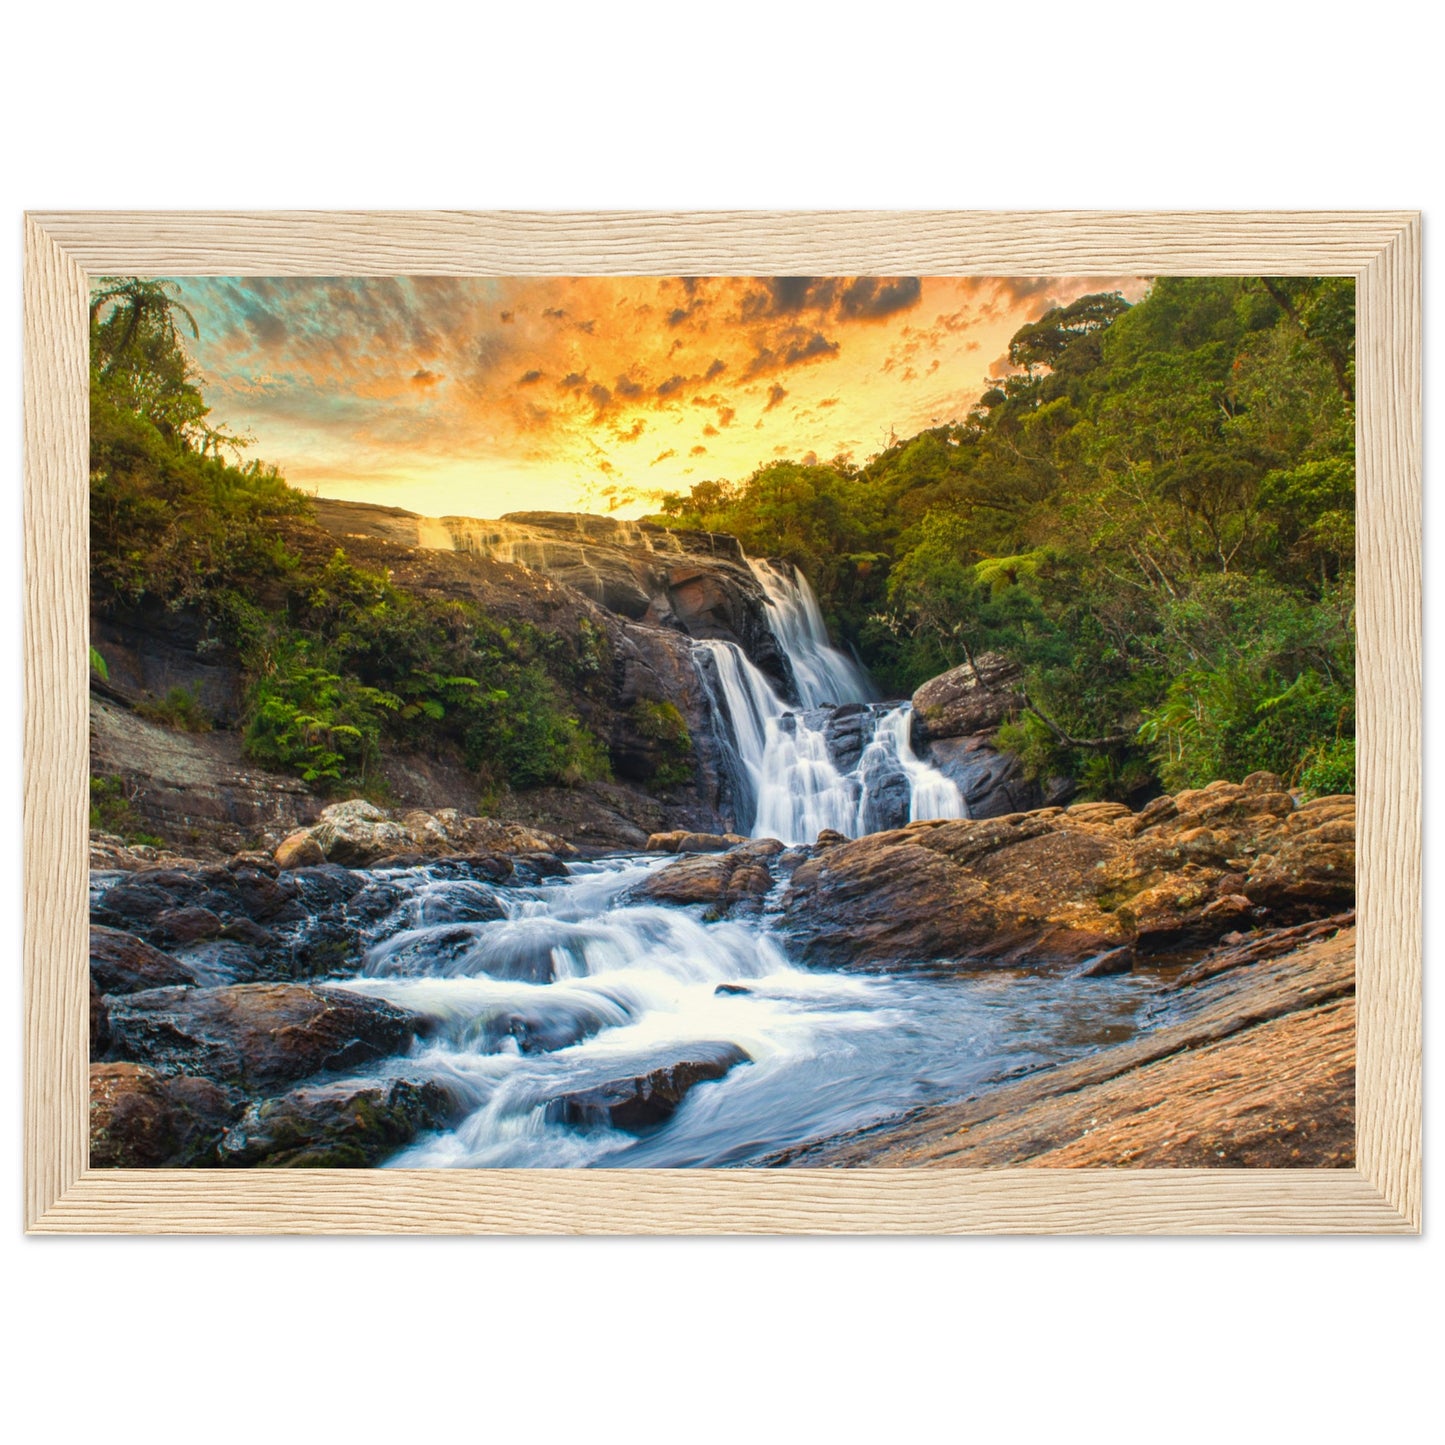 Waterfall Srilanka